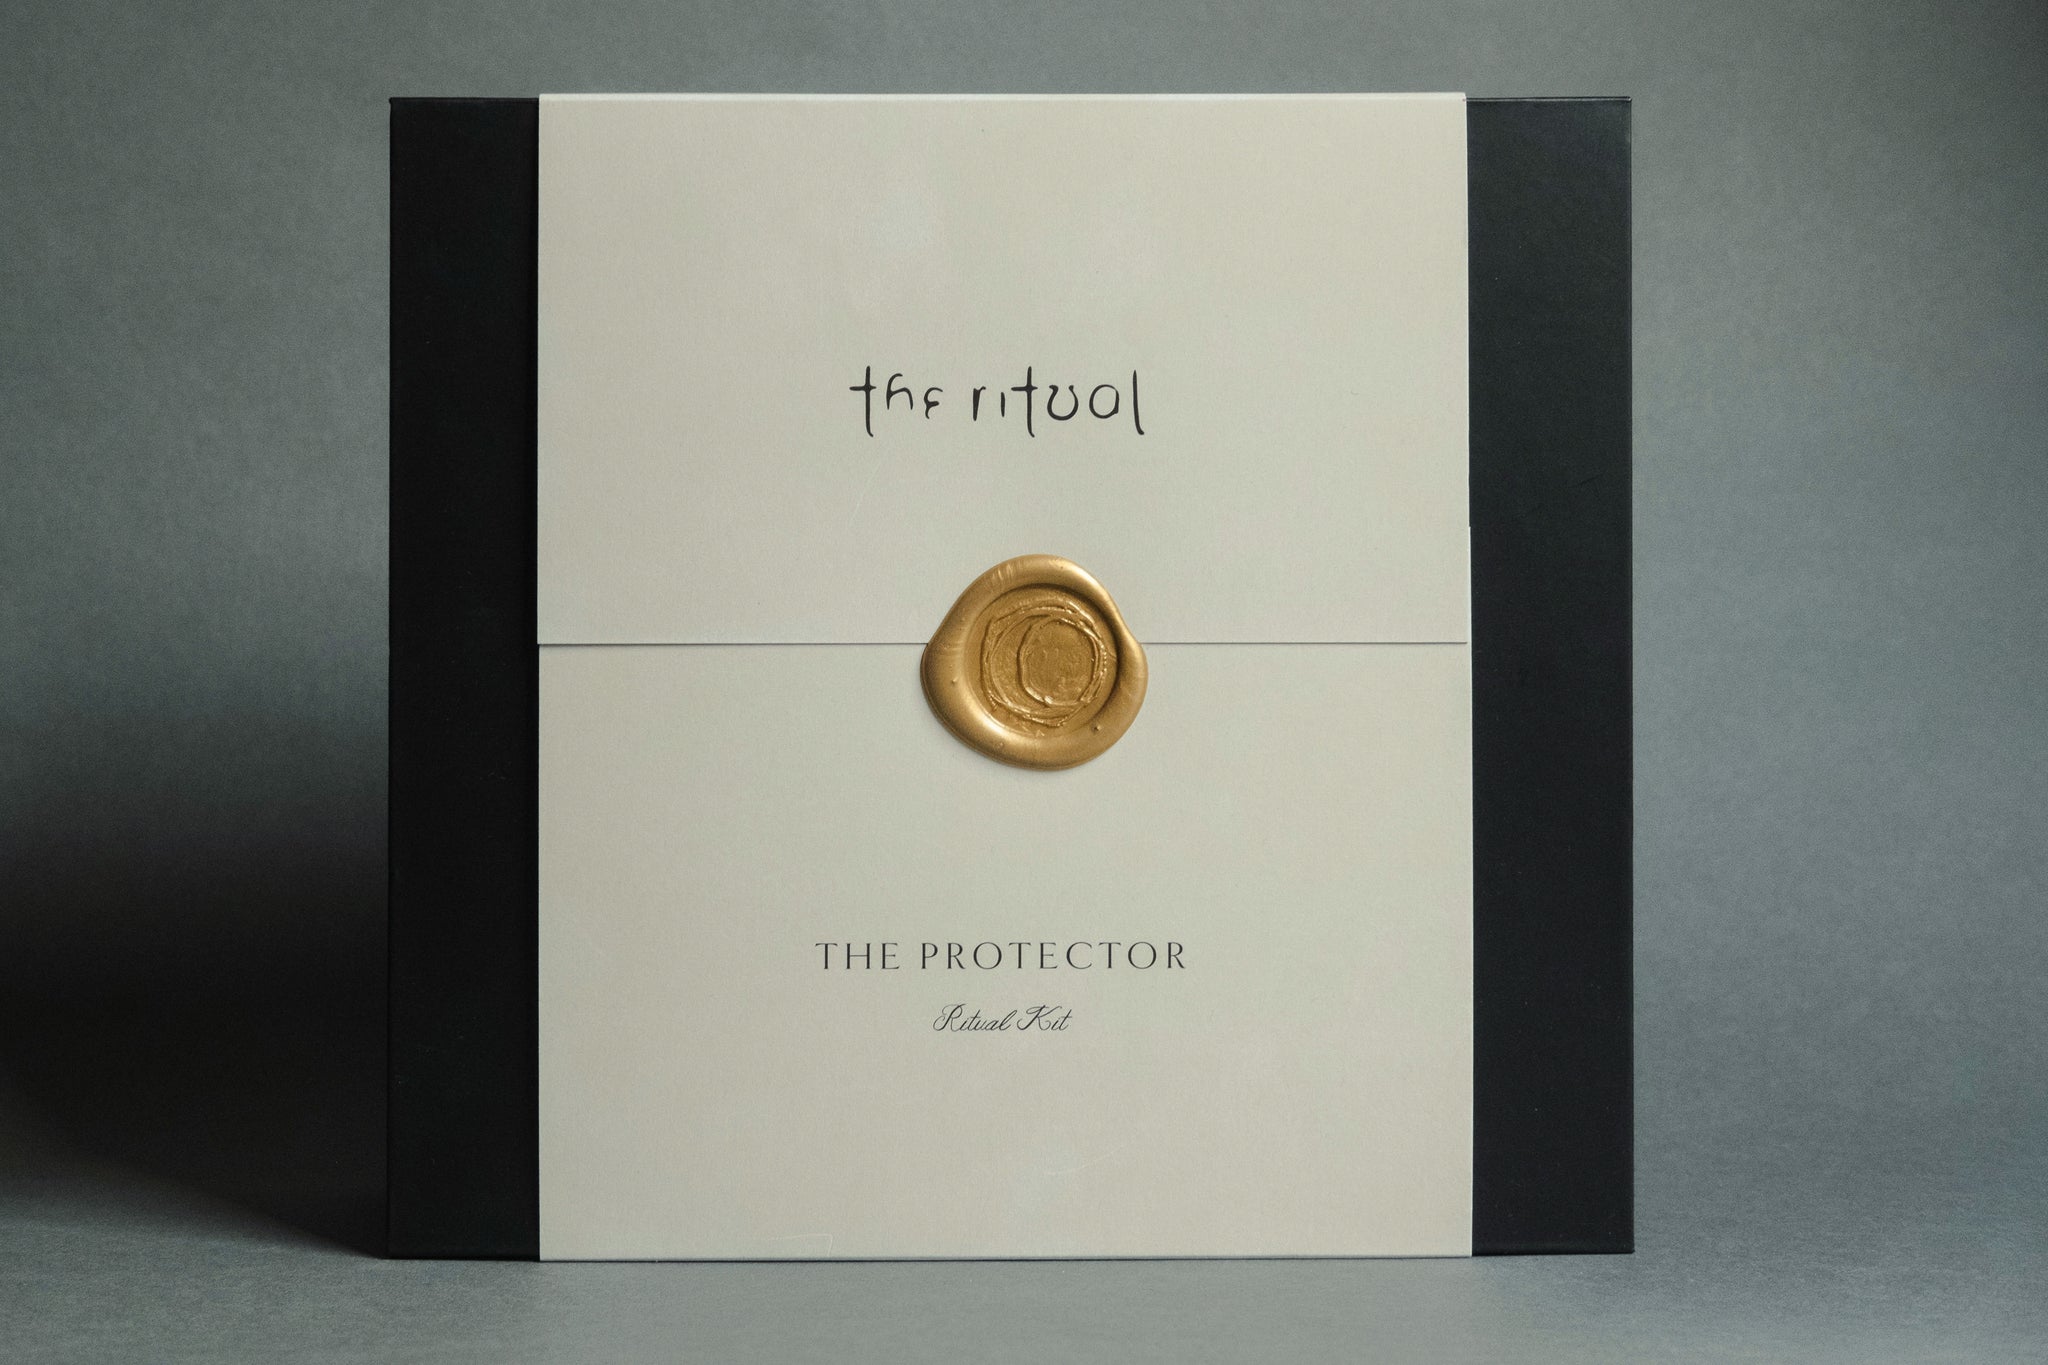 The Protector Ritual Kit ™